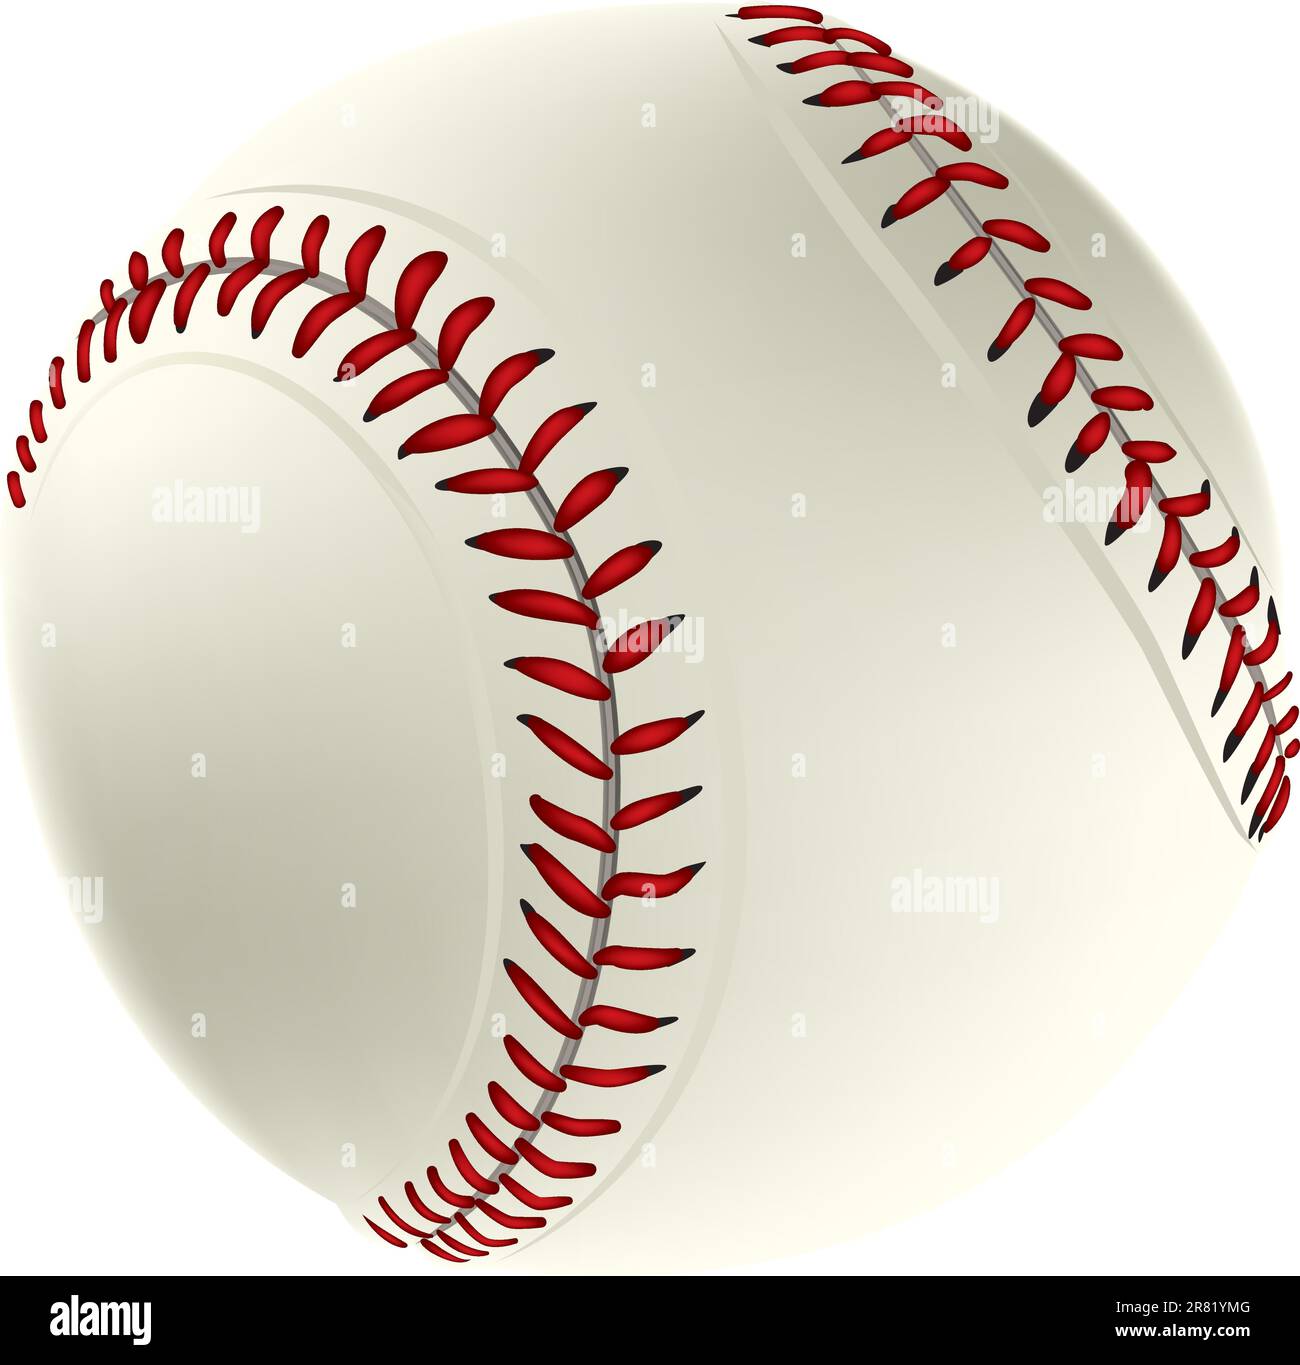 Illustration/Image of a baseball Stock Vector